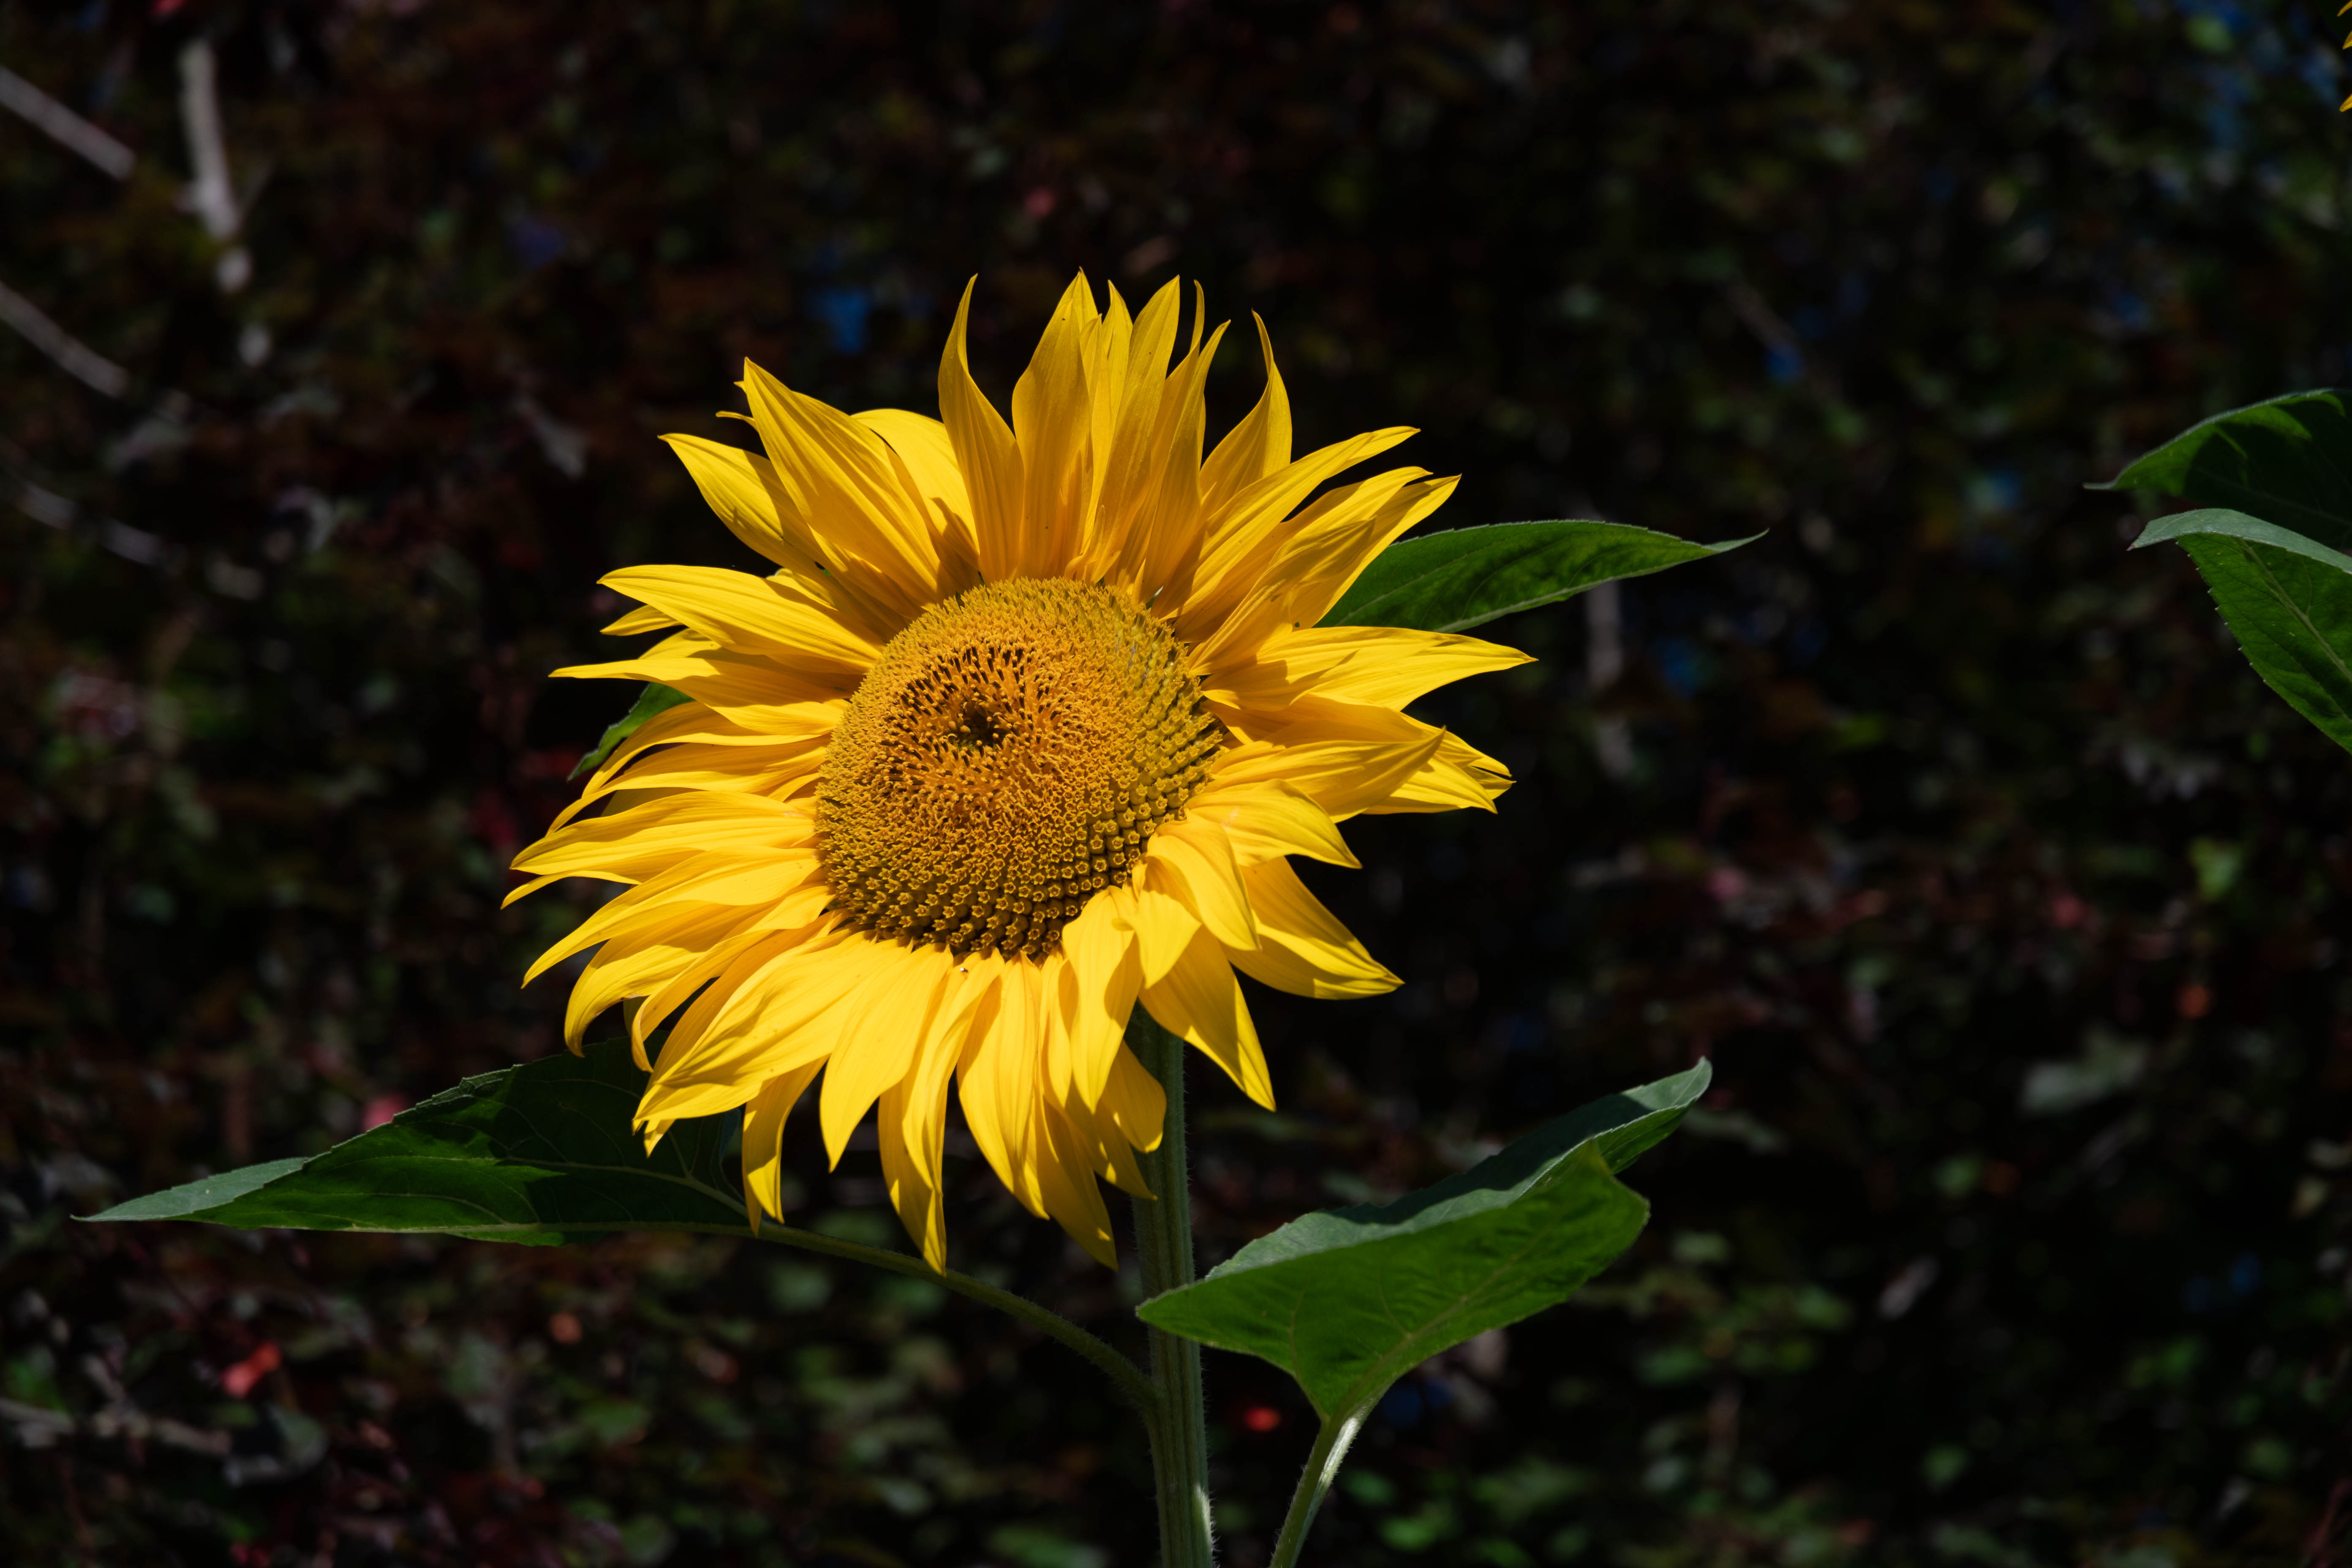 July: Sunflower, Hopbines Manor Garden